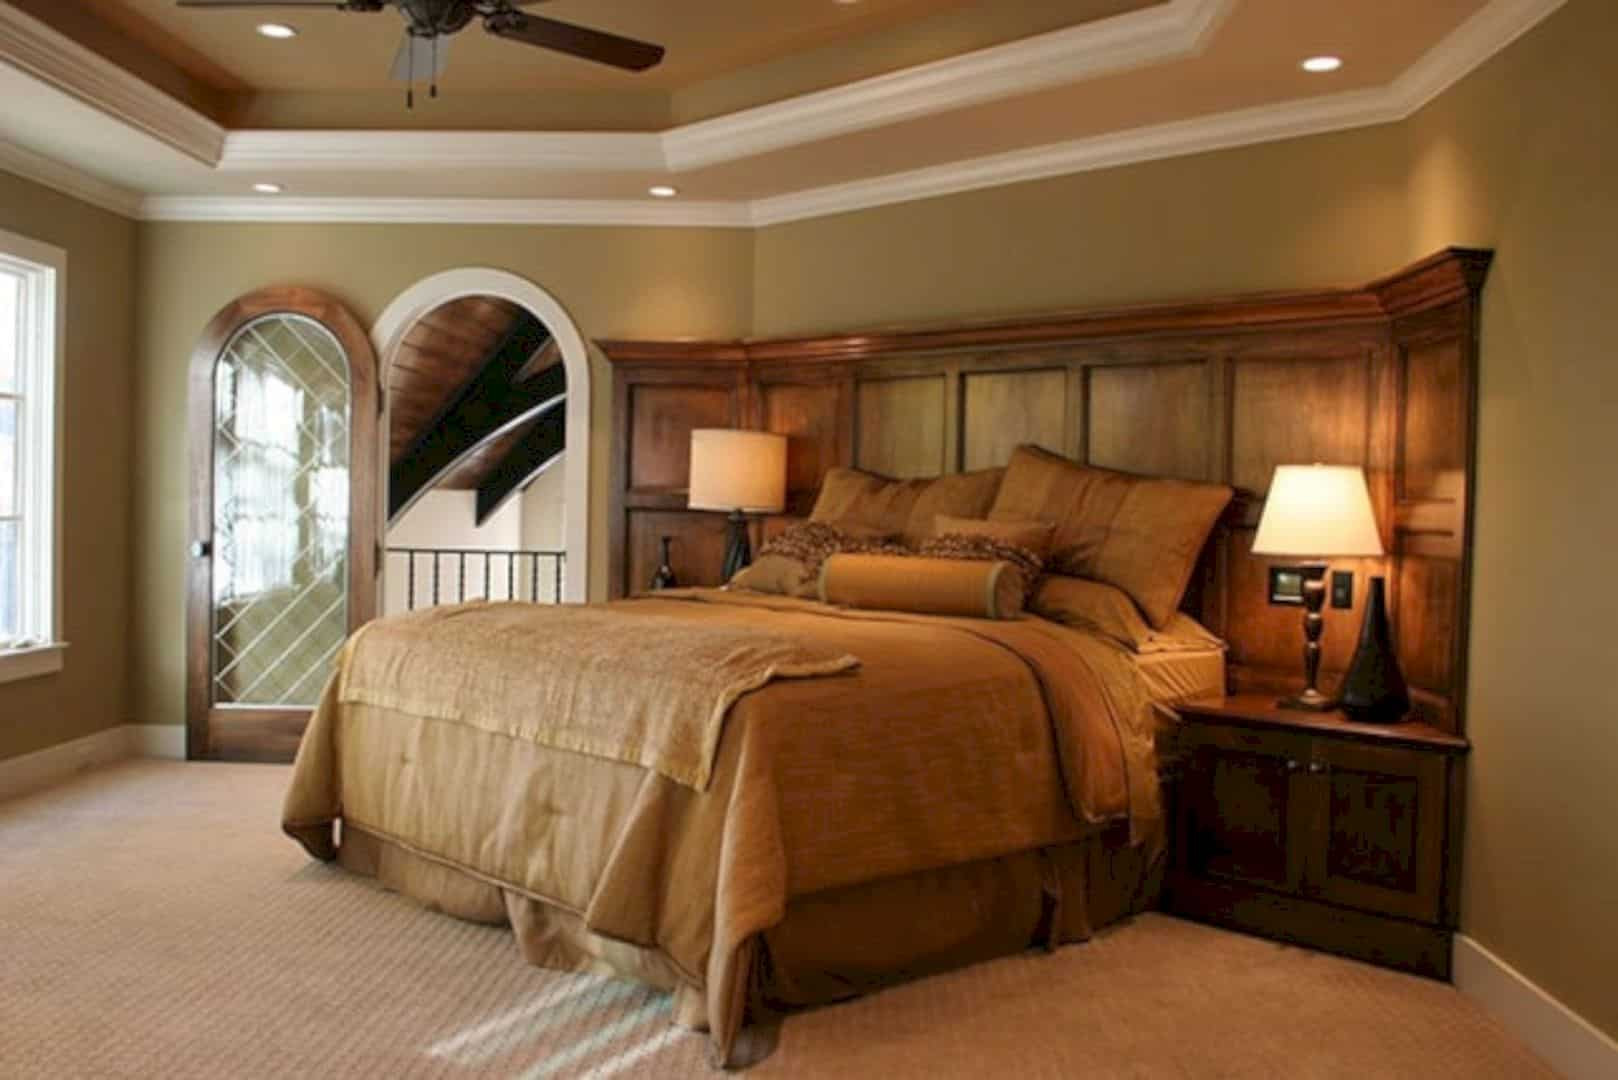 Rustic Master Bedroom Ideas
 16 Classy Rustic Bedroom Designs